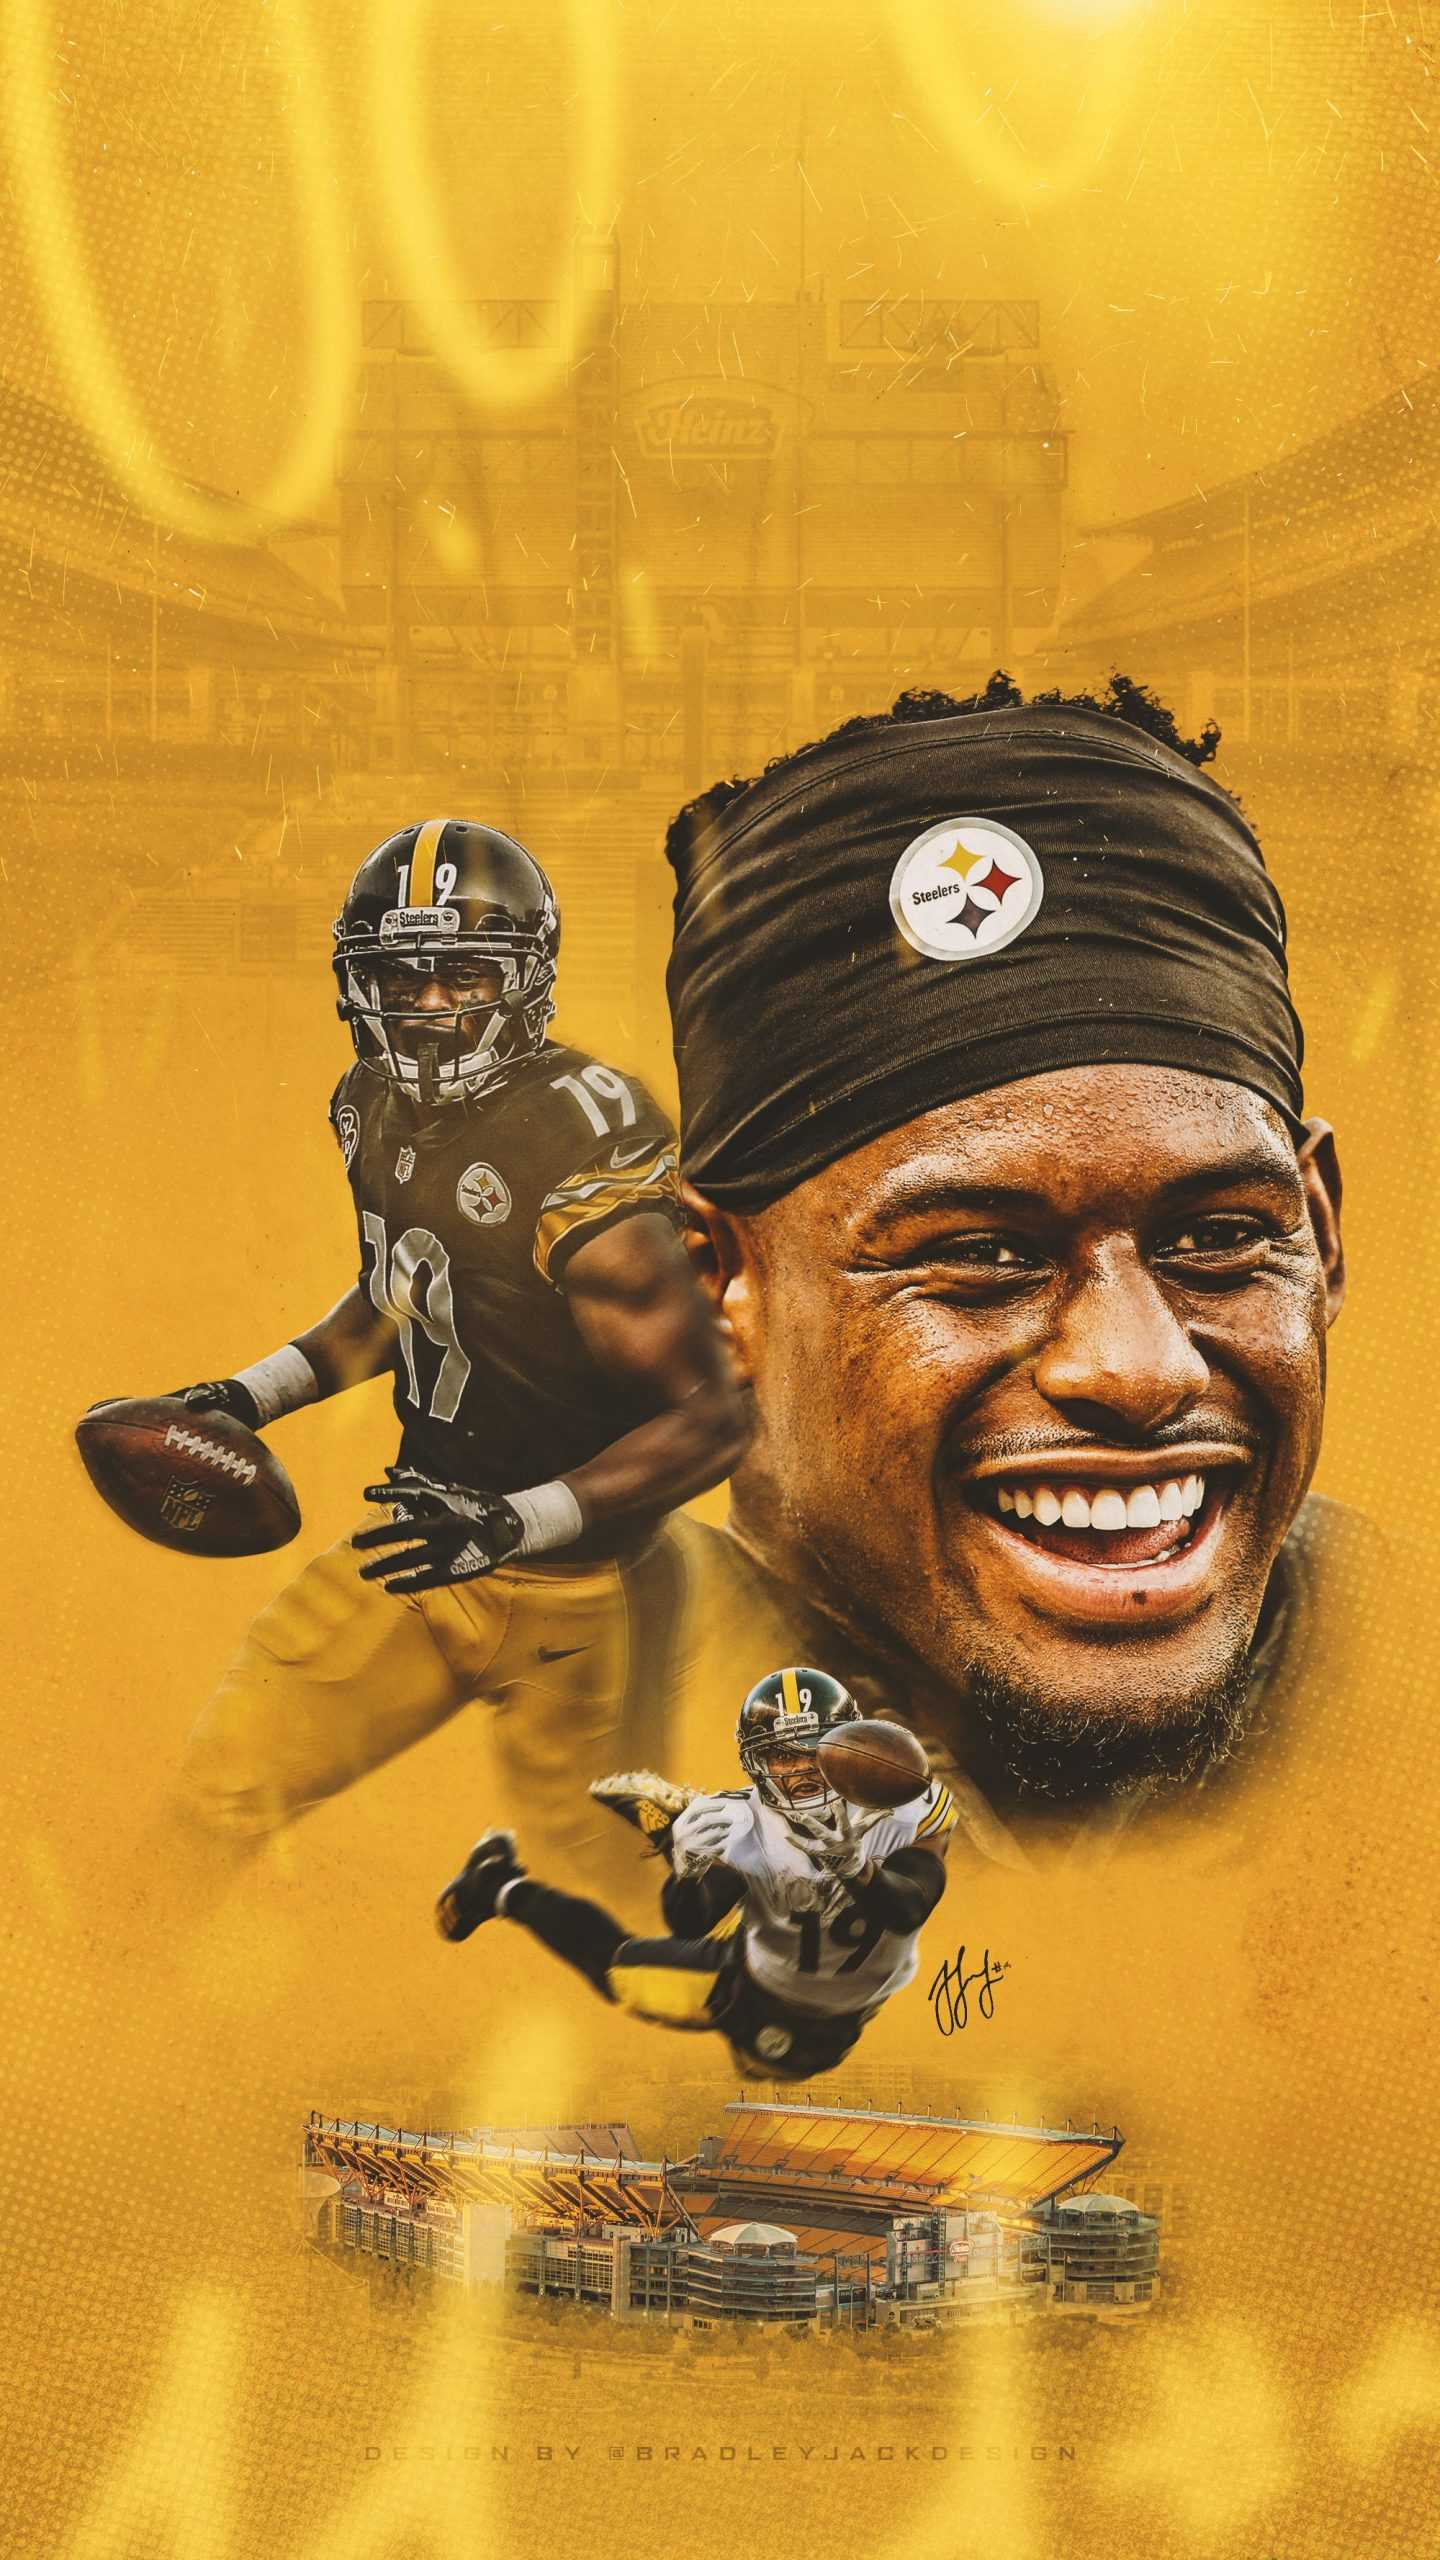 1440x2560 Pittsburgh Steelers Wallpaper